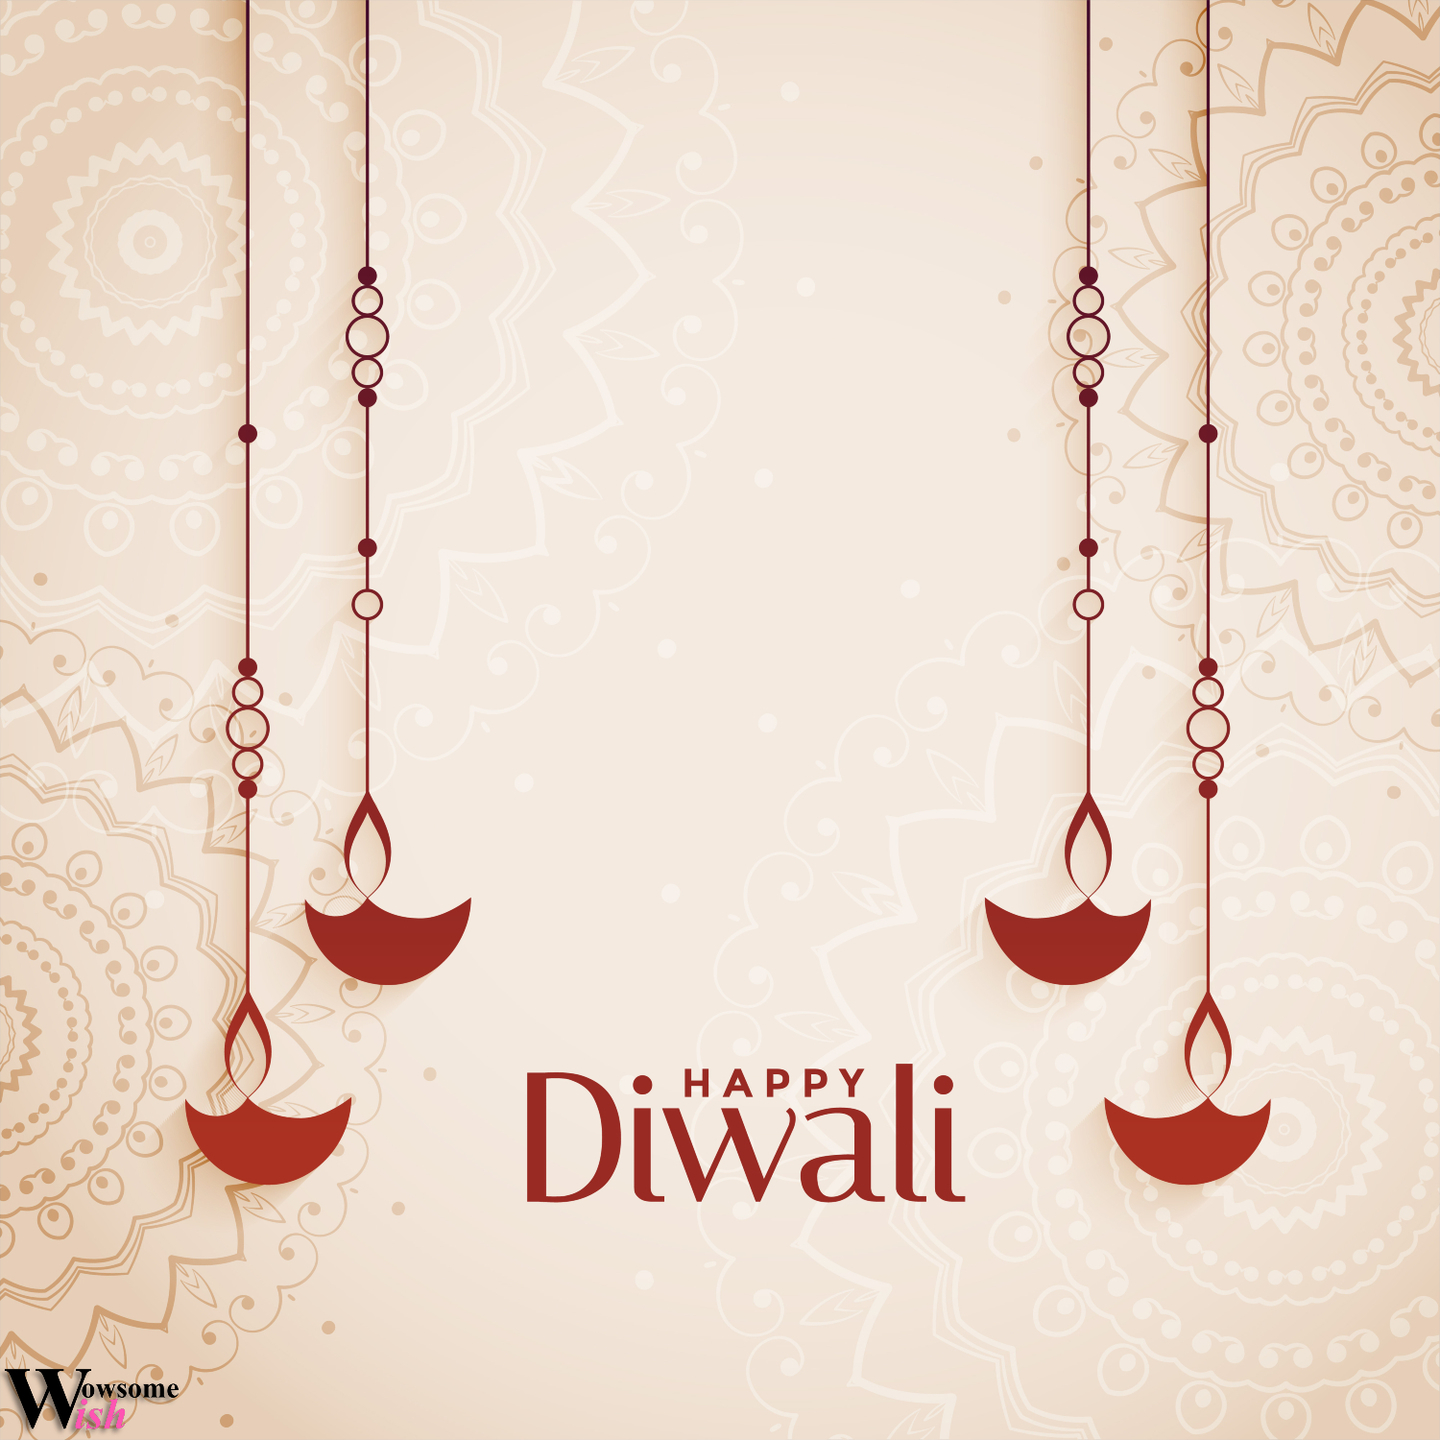 Wowsome Wish Card For Diwali Gift - 3